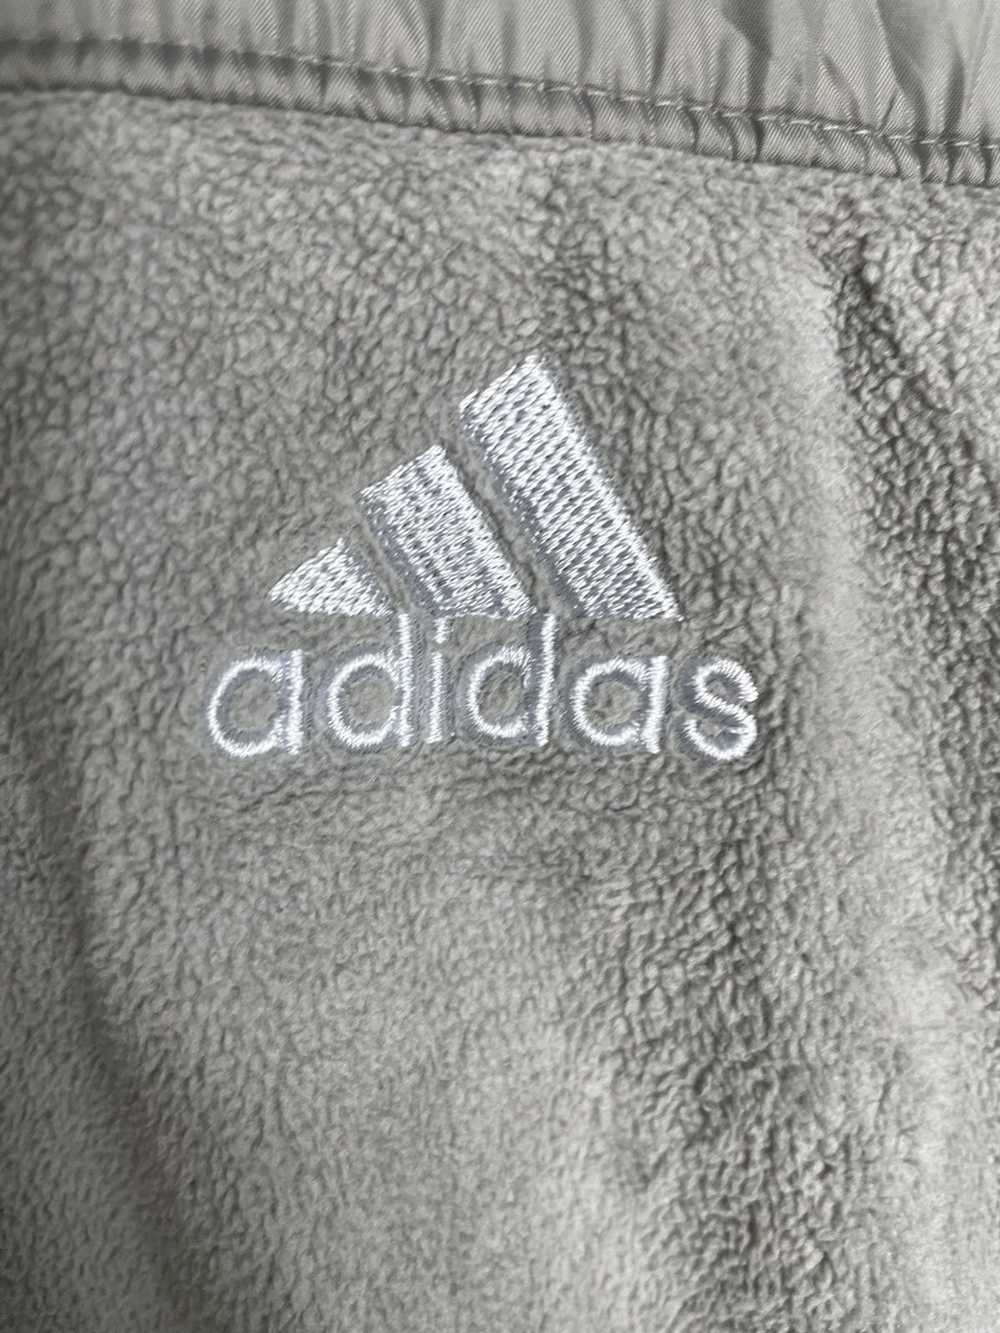 Adidas ADIDAS ZIPPER SWEATER - image 6